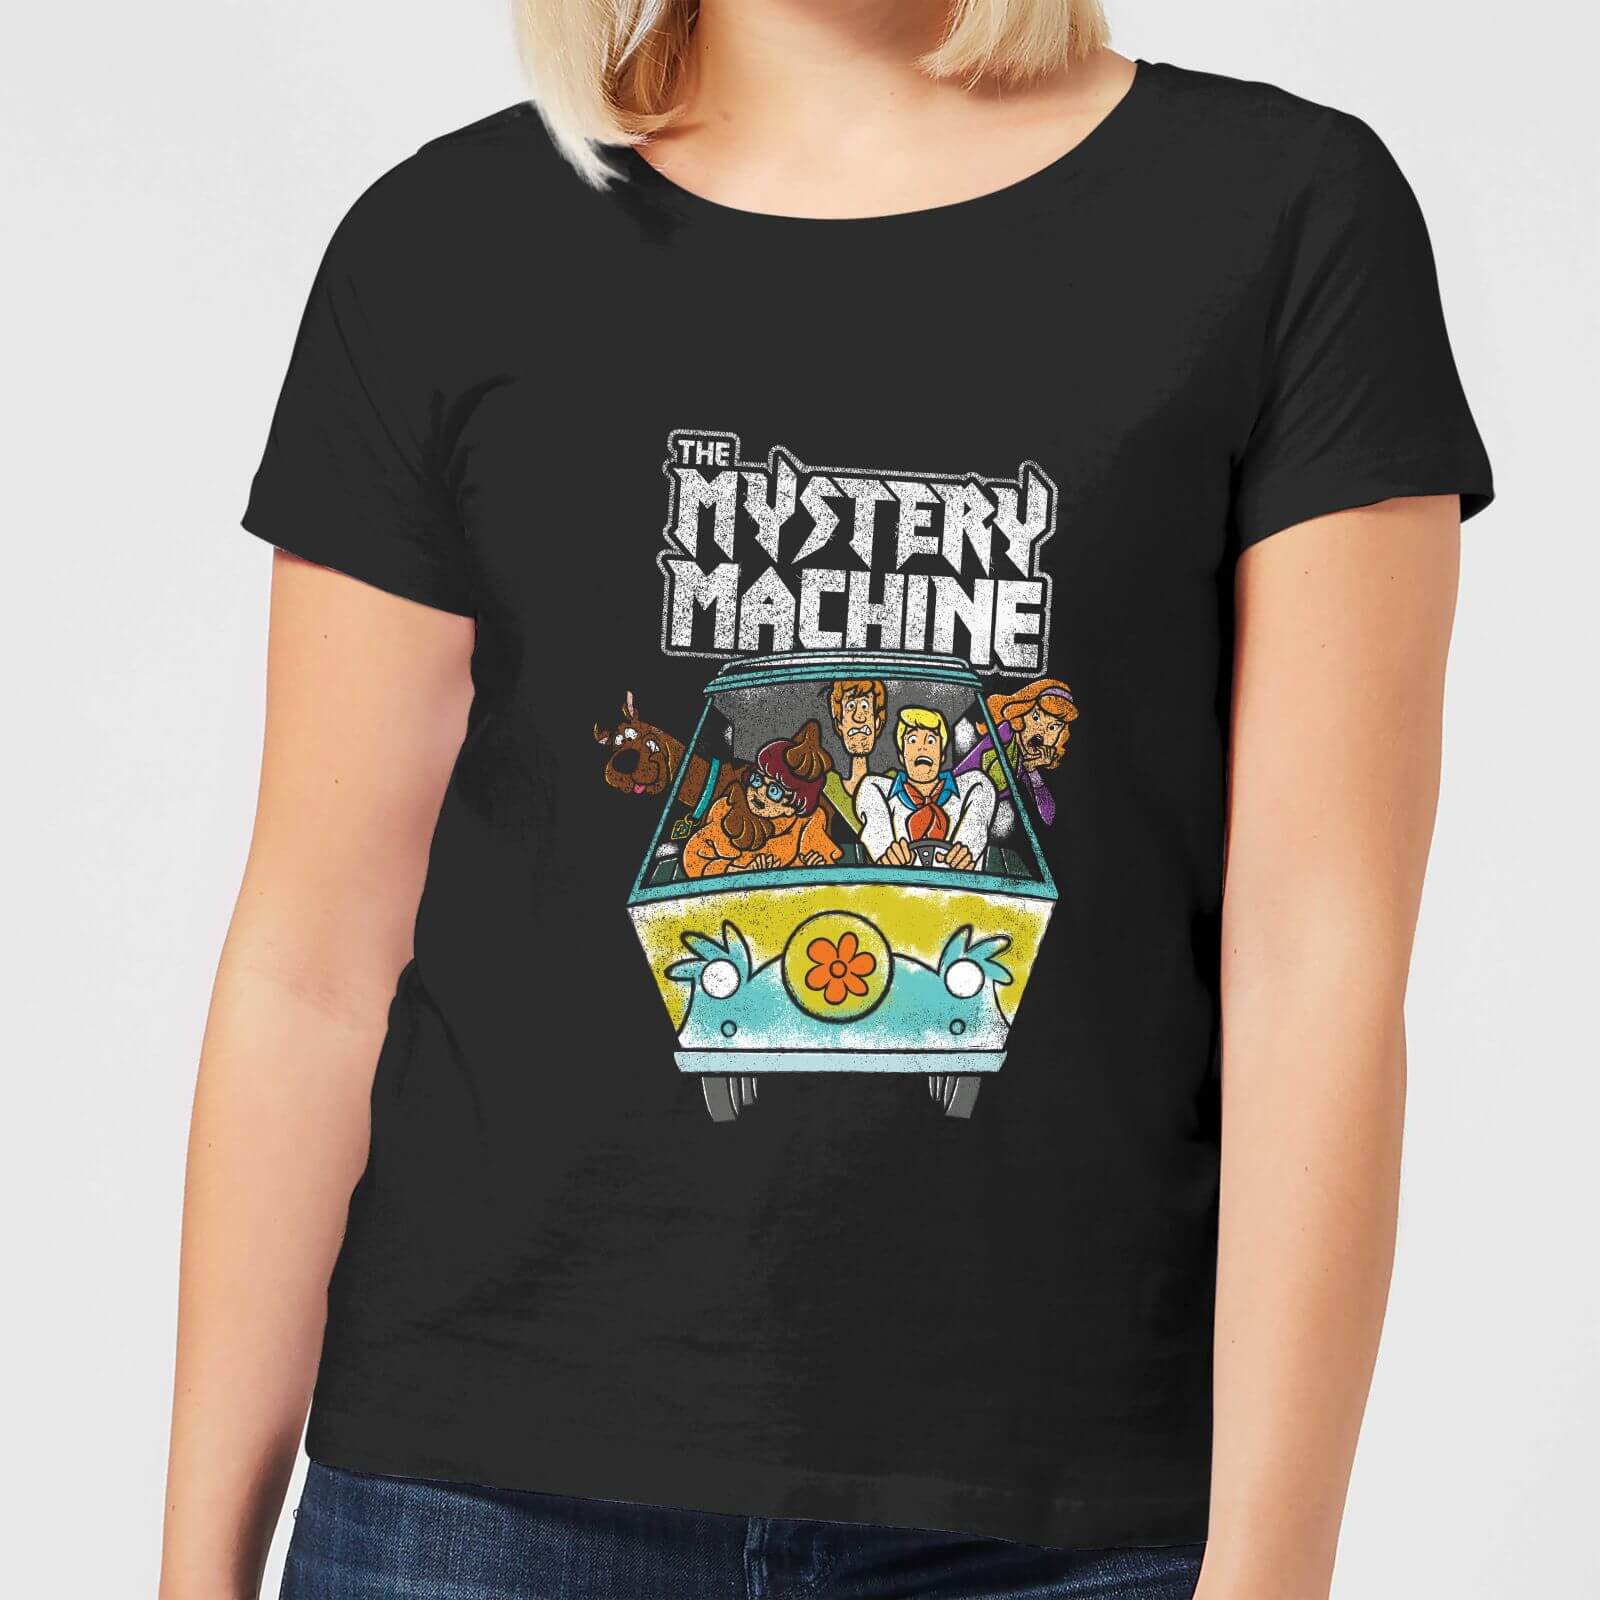 Scooby Doo Mystery Machine Heavy Metal Women's T-Shirt - Black - M - Black